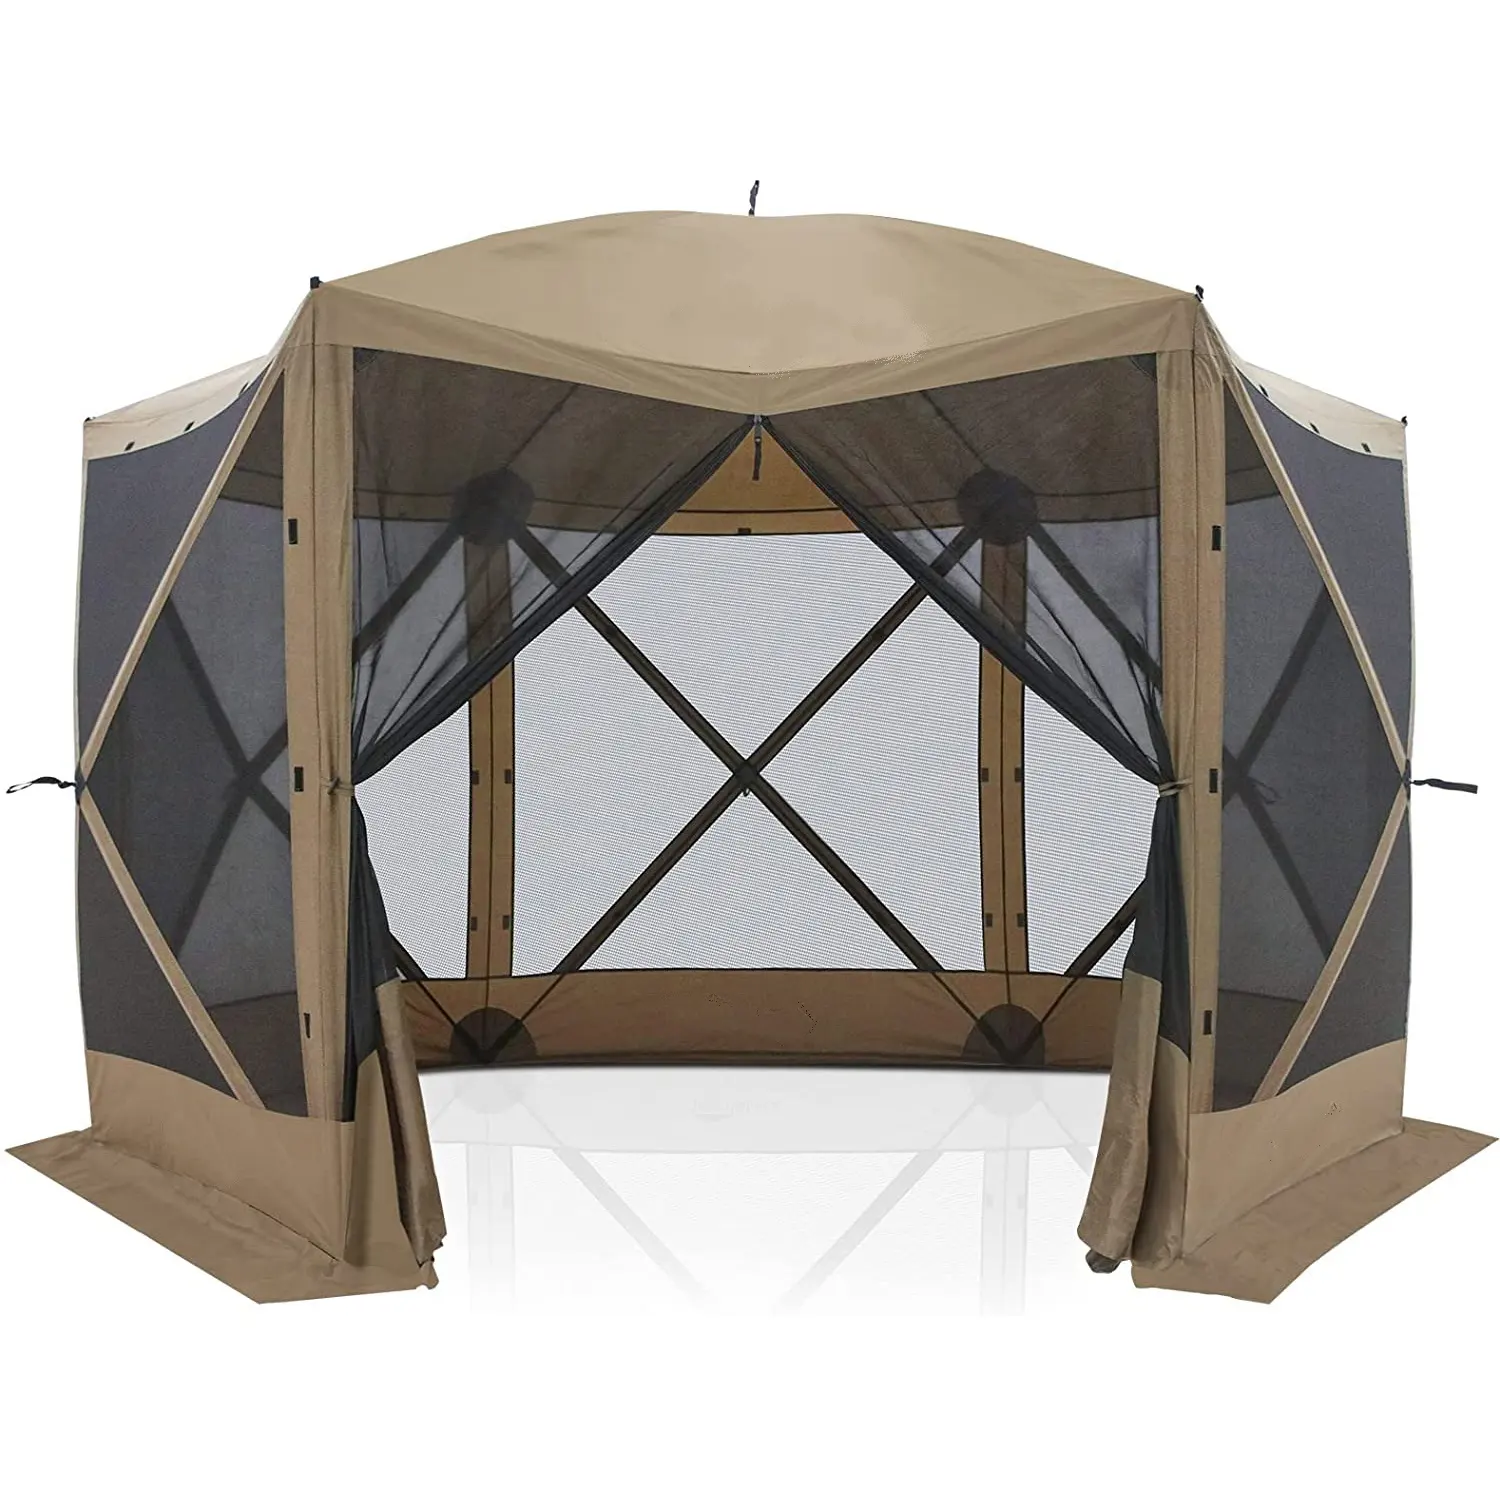 Tenda Portabel Muncul, Tempat Berlindung Berkemah Instan Luar Ruangan Layar Gazebo Tenda Kanopi 6 Sisi Rumah